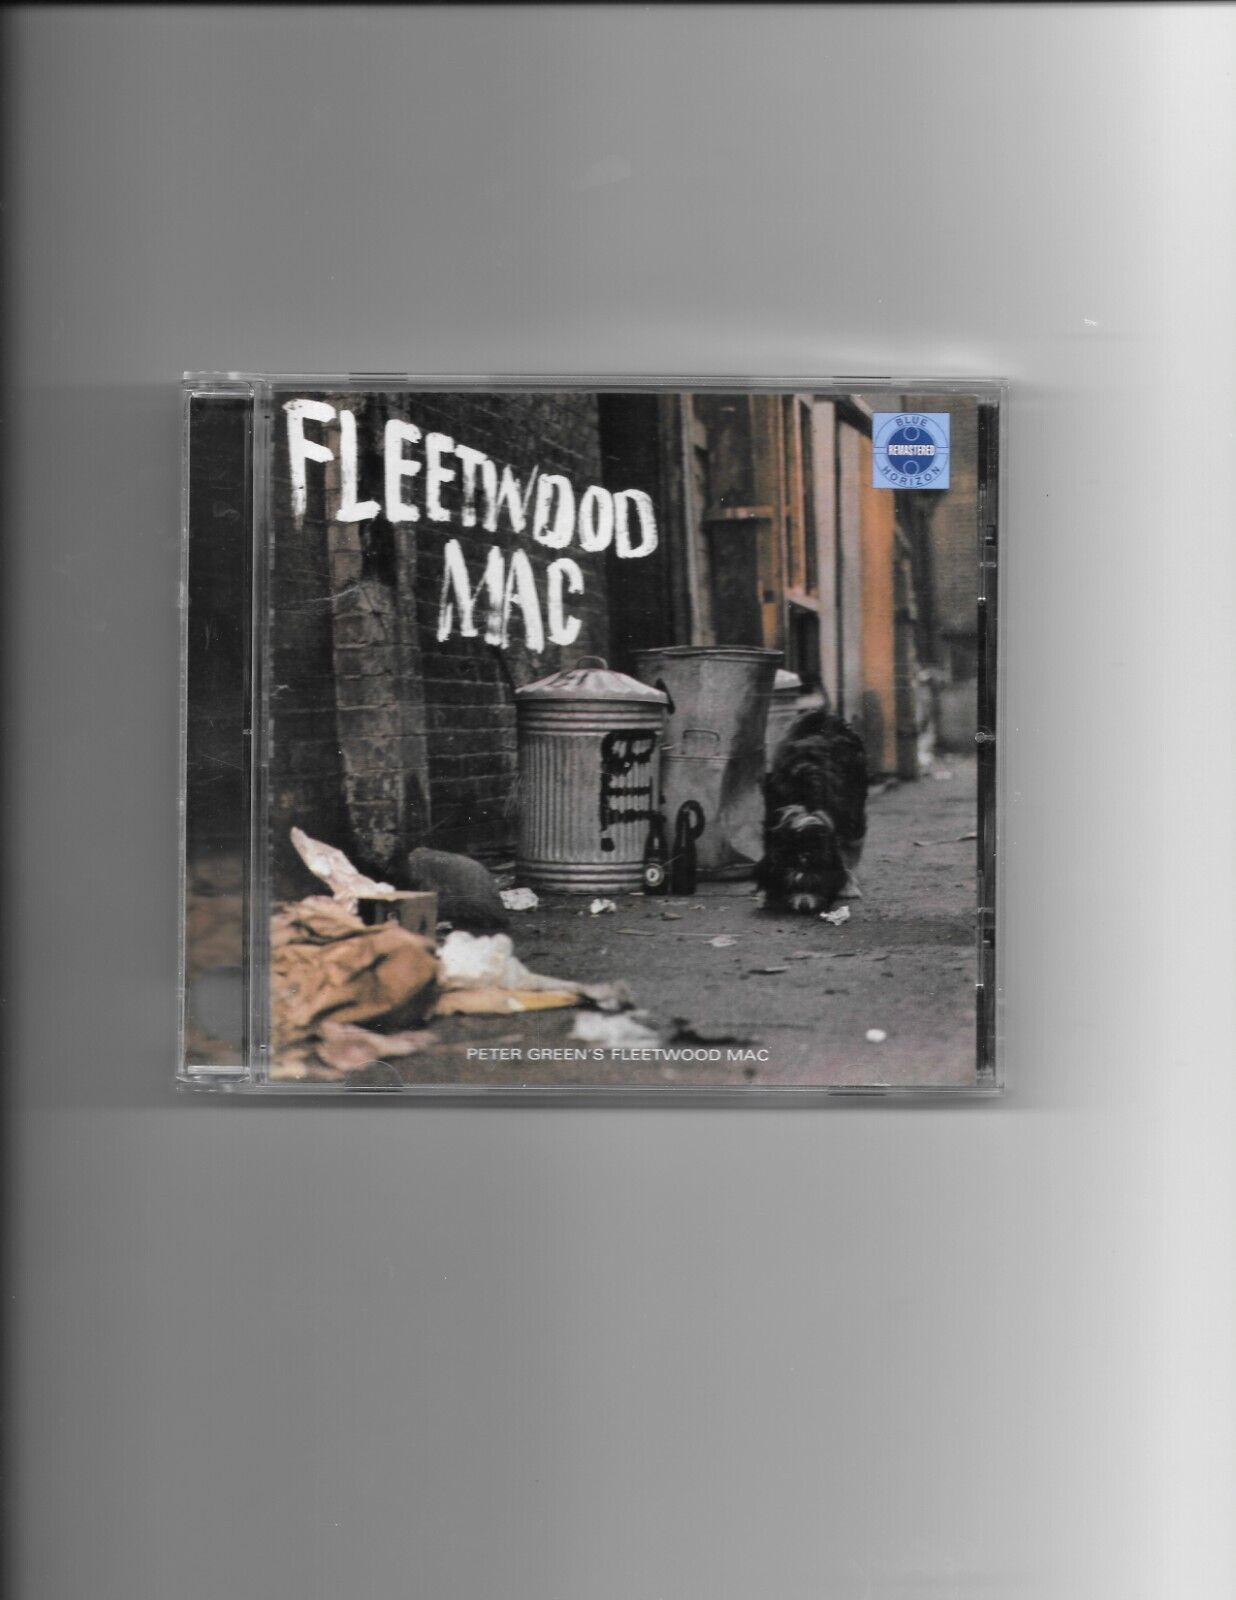 Peter Green's Fleetwood Mac by Fleetwood Mac (CD, 2004) bonus tracks